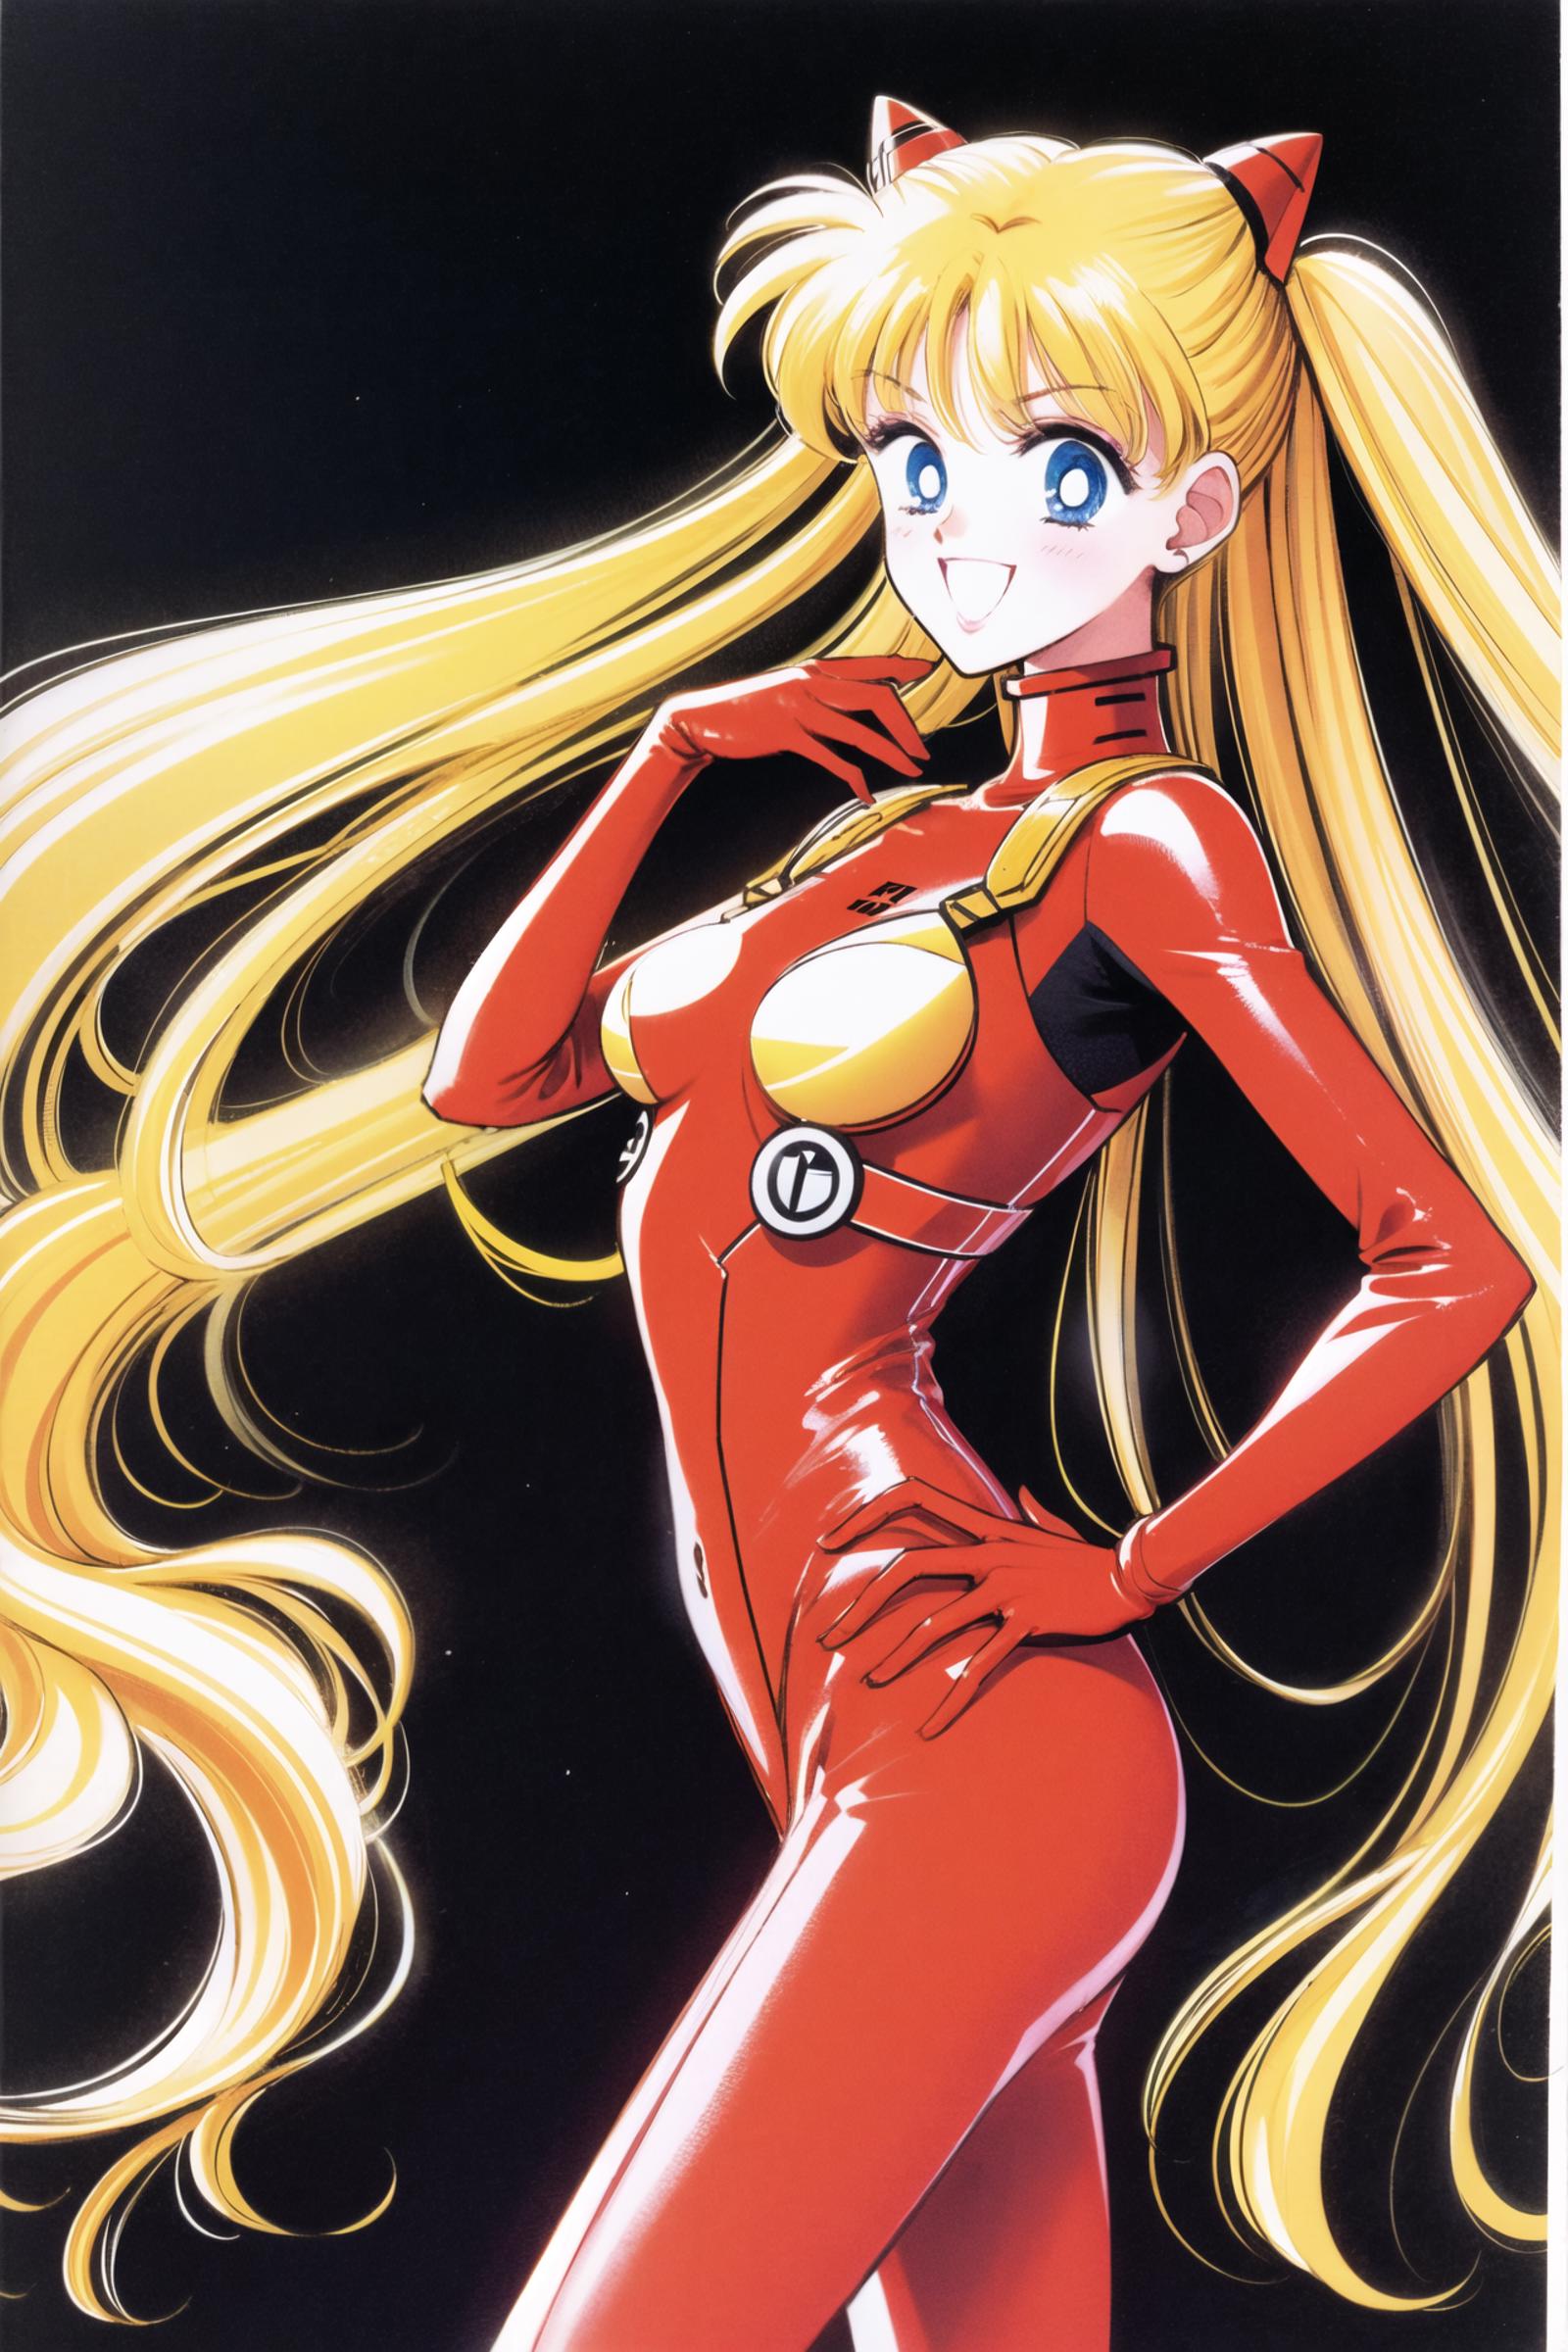 Takeuchi Naoko/武内直子 《美少女戦士セーラームーン》/《Sailor Moon》/《美少女战士》 - Artist Style image by flyx3